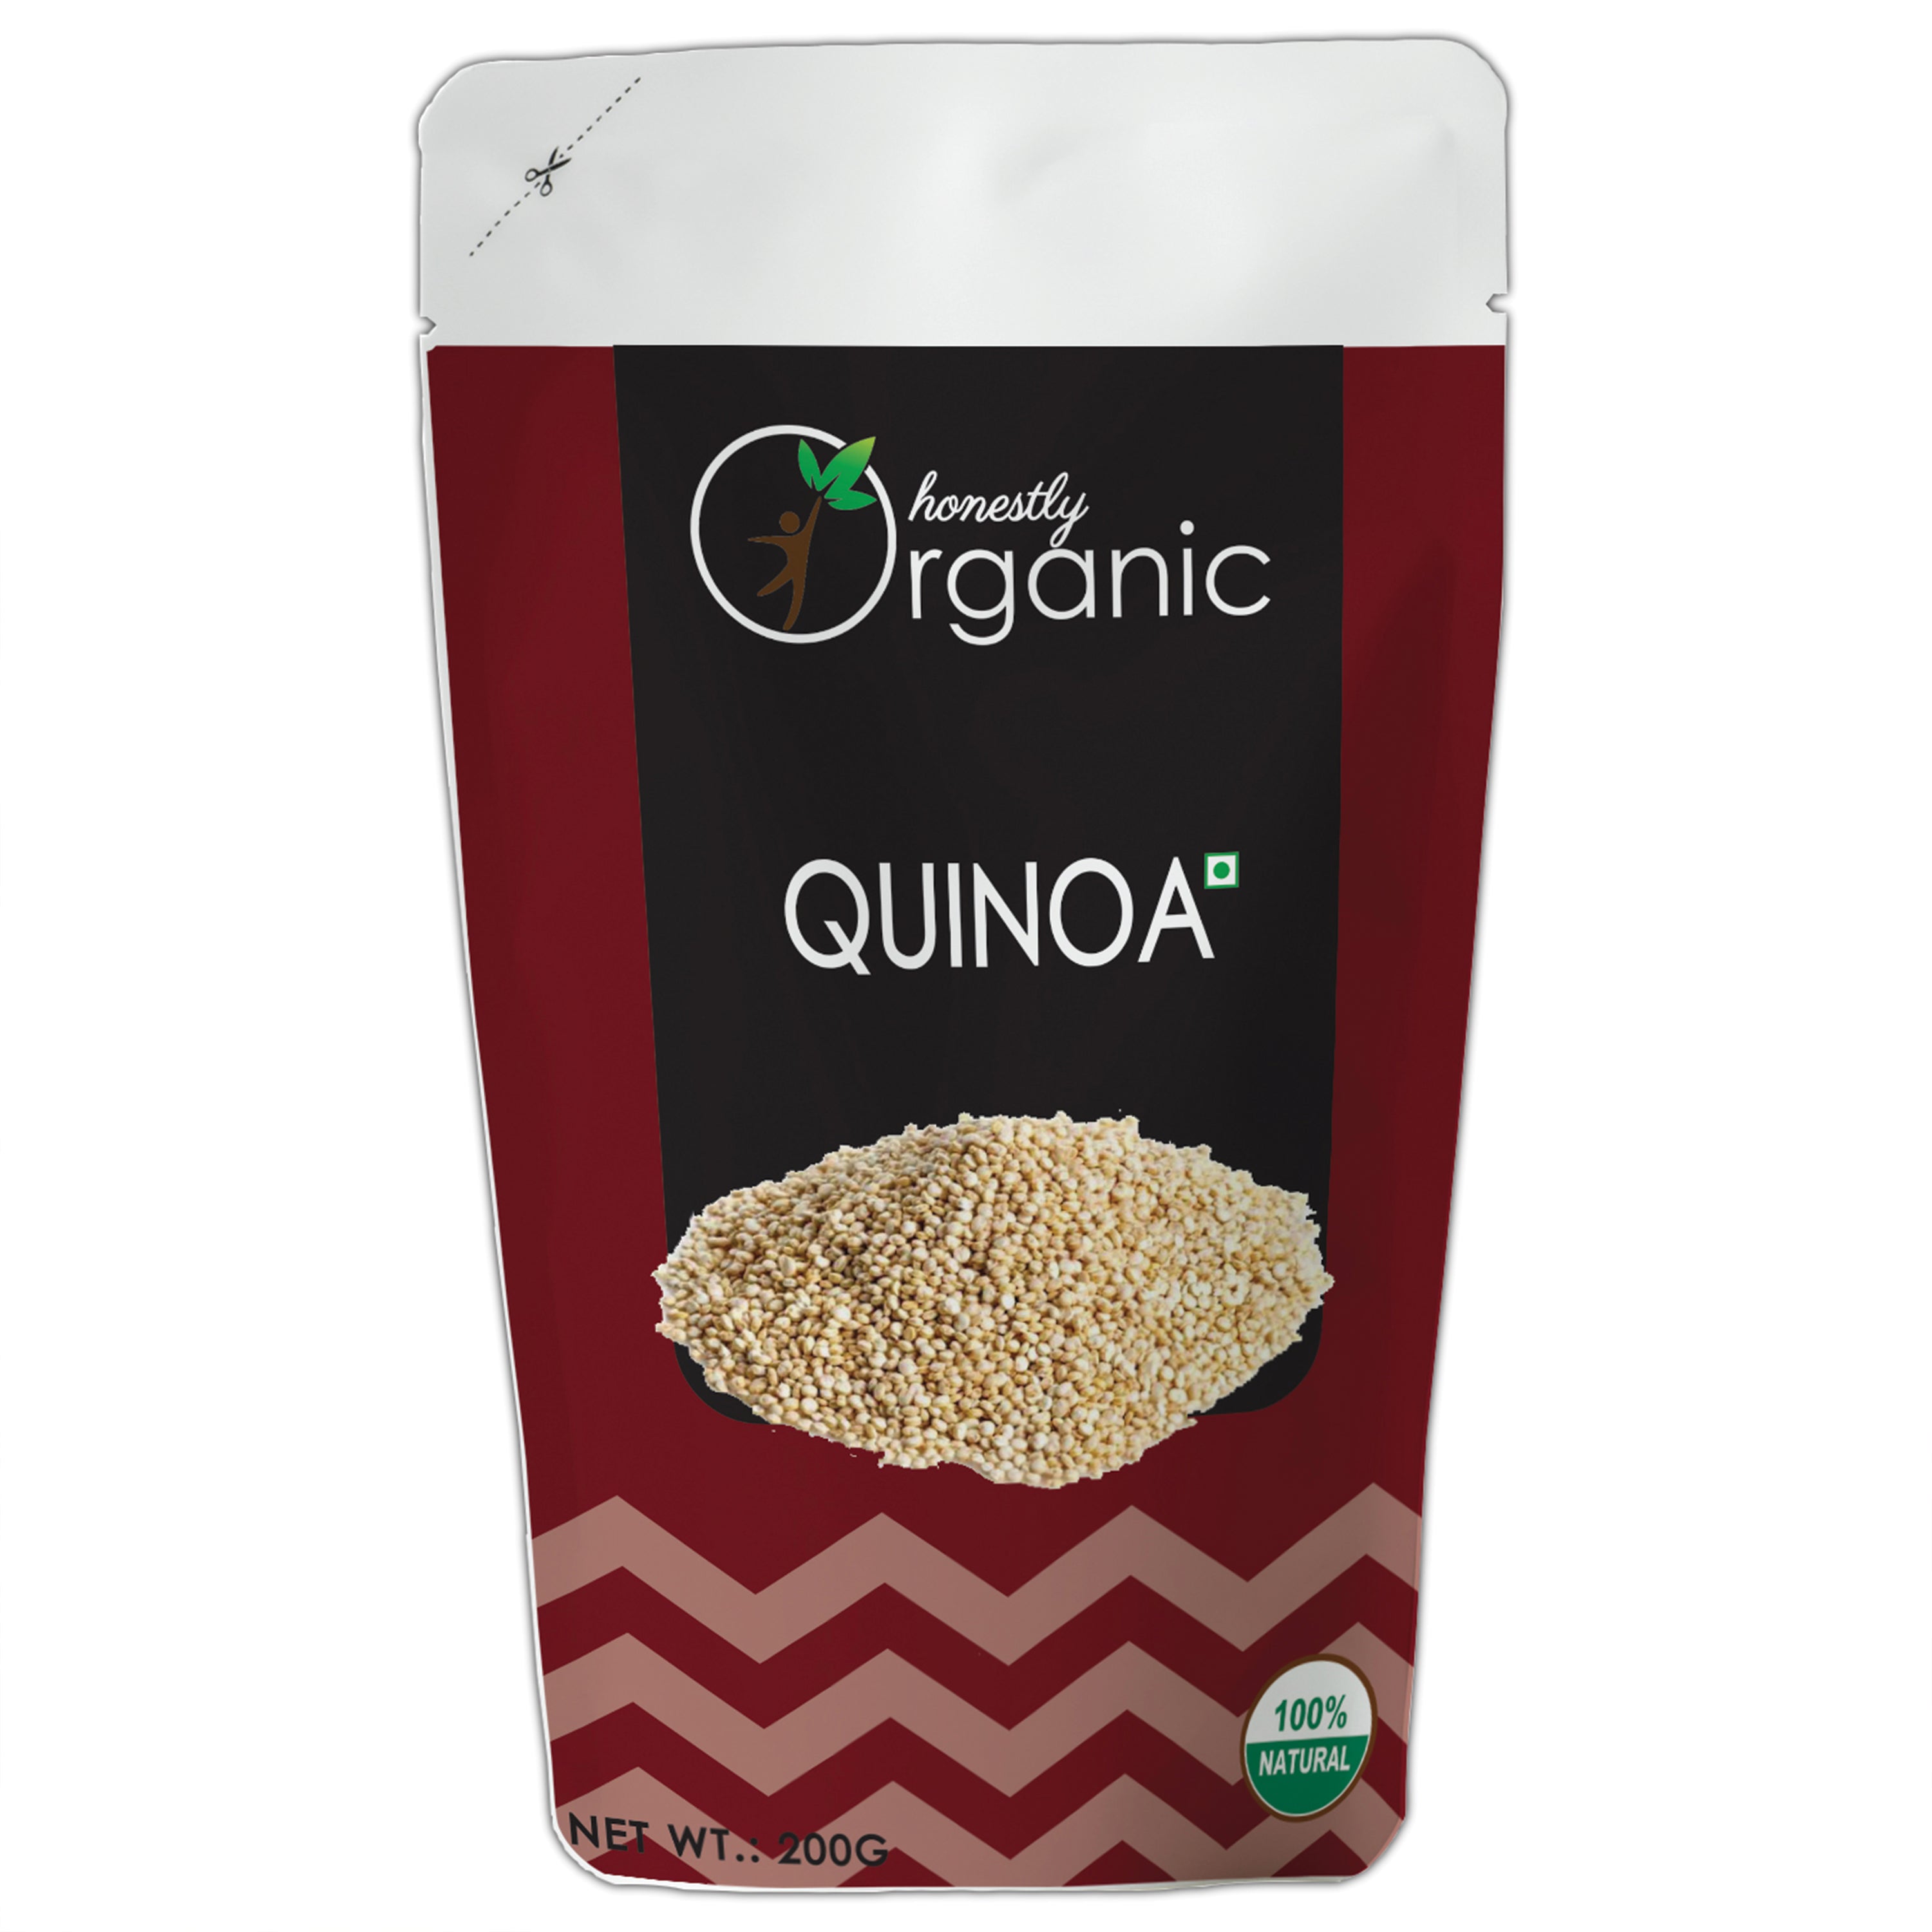 D-Alive Honestly Organic Quinoa - 200g